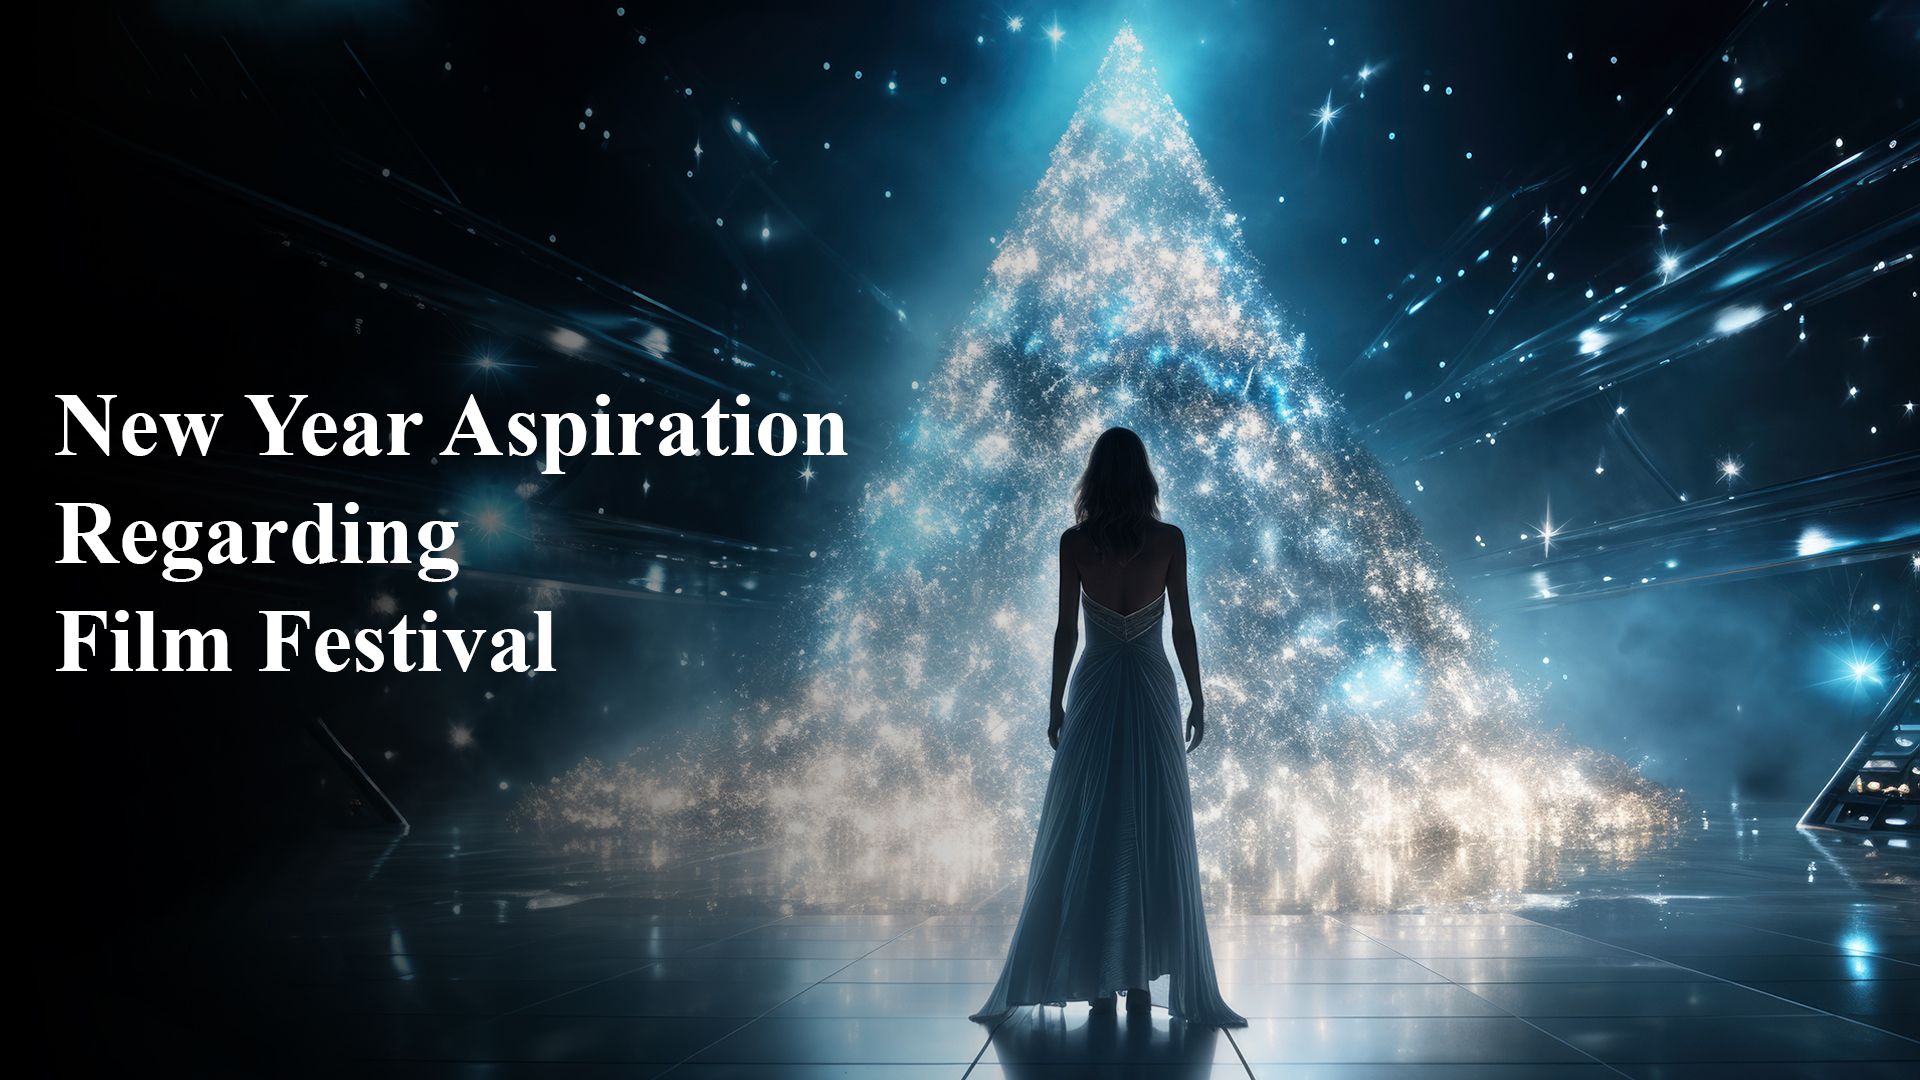 New Year aspiration regarding Film Festival